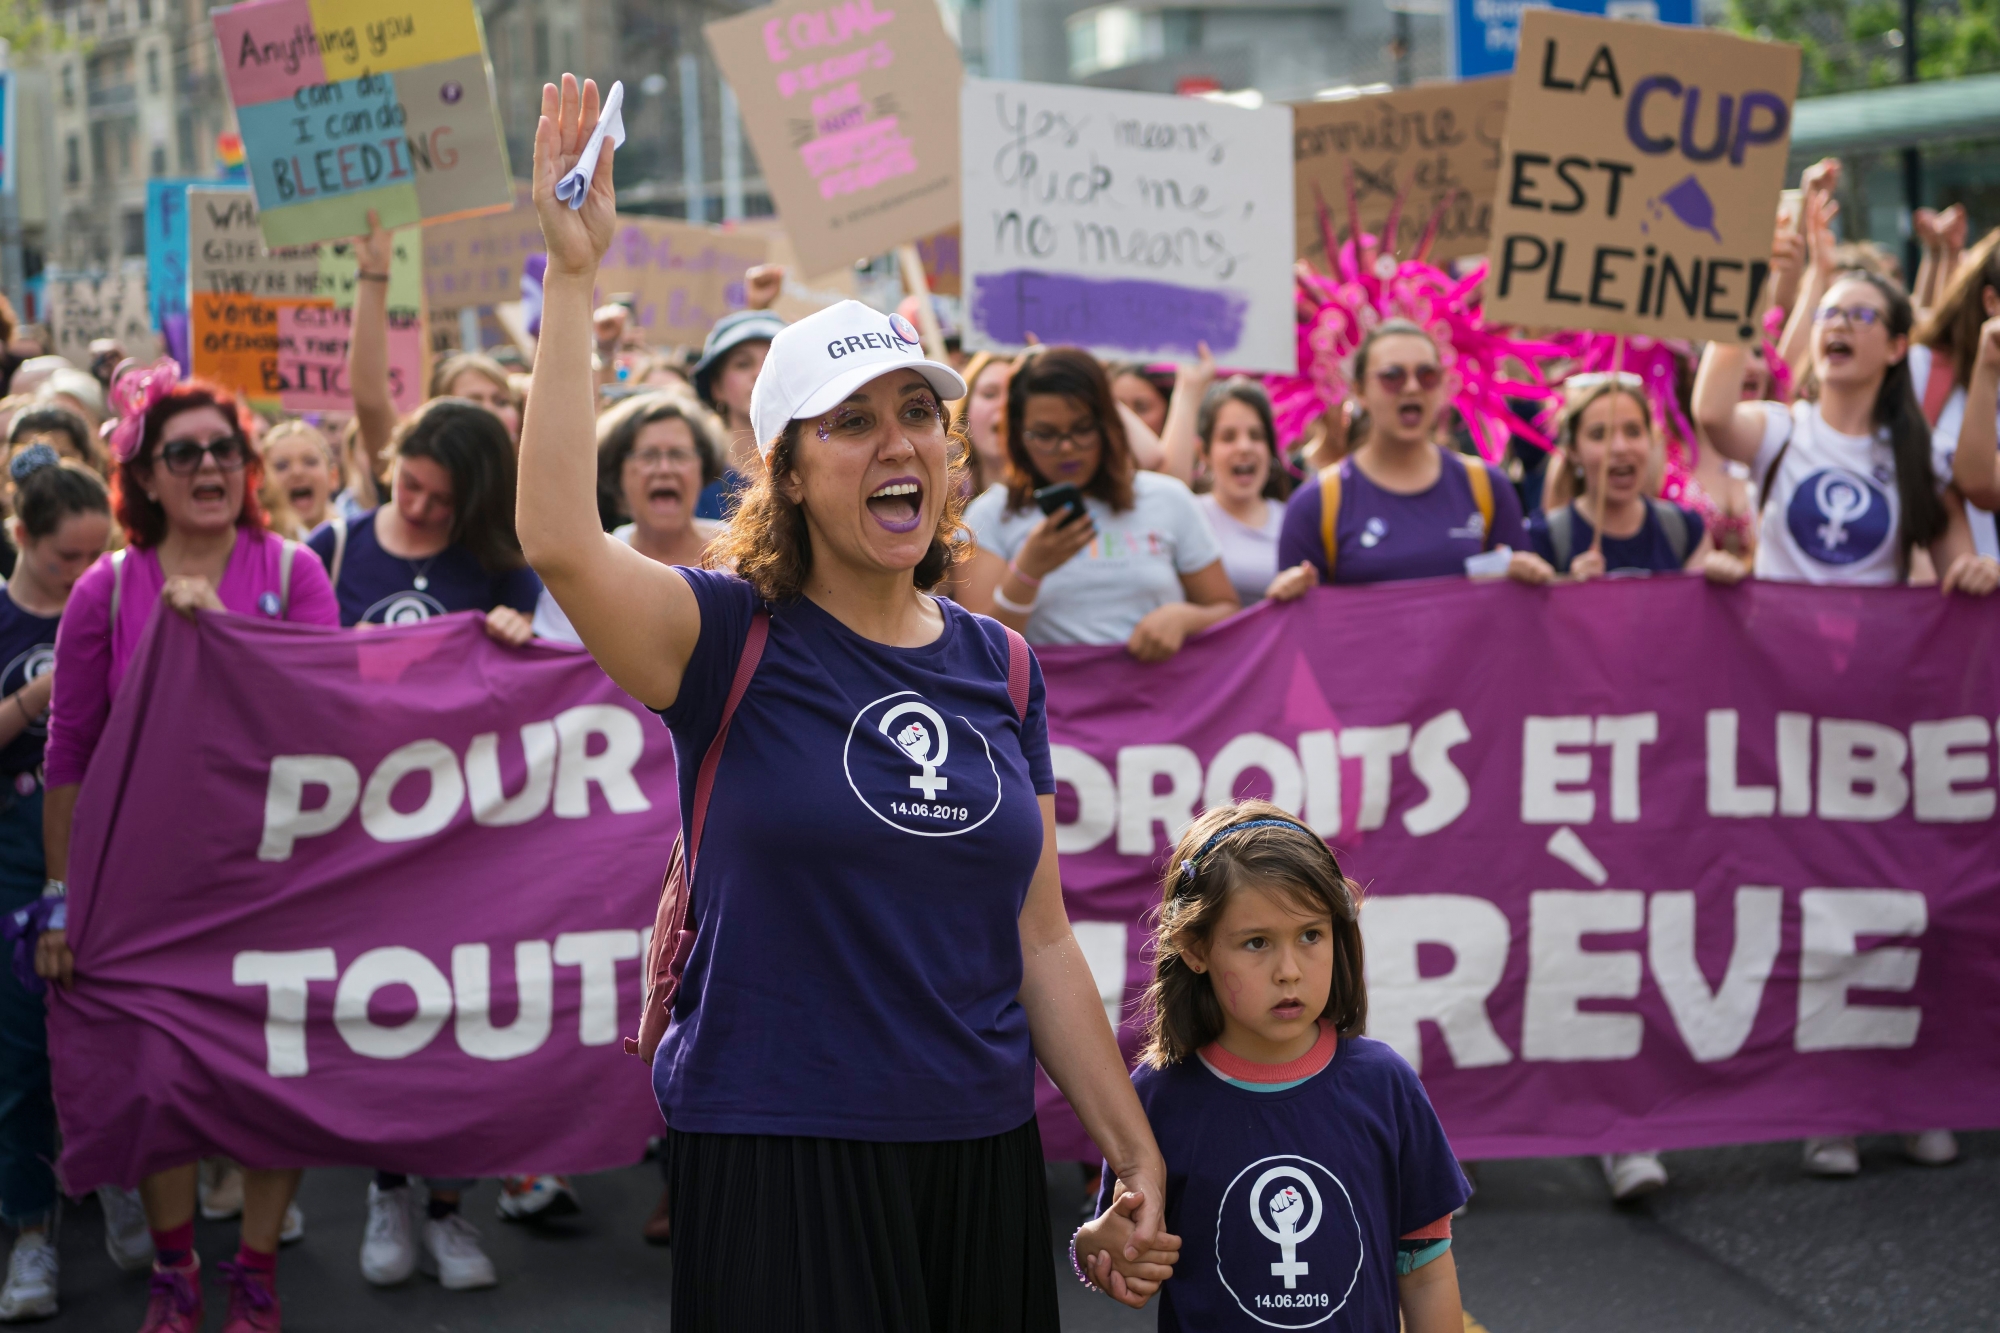 Des femmes manifestent pendant le grand cortege lors de la Greve nationale des femmes ce vendredi 14 juin 2019 a Lausanne. (KEYSTONE/Jean-Christophe Bott) SCHWEIZ FRAUENSTREIK GROSSKUNDGEBUNGEN